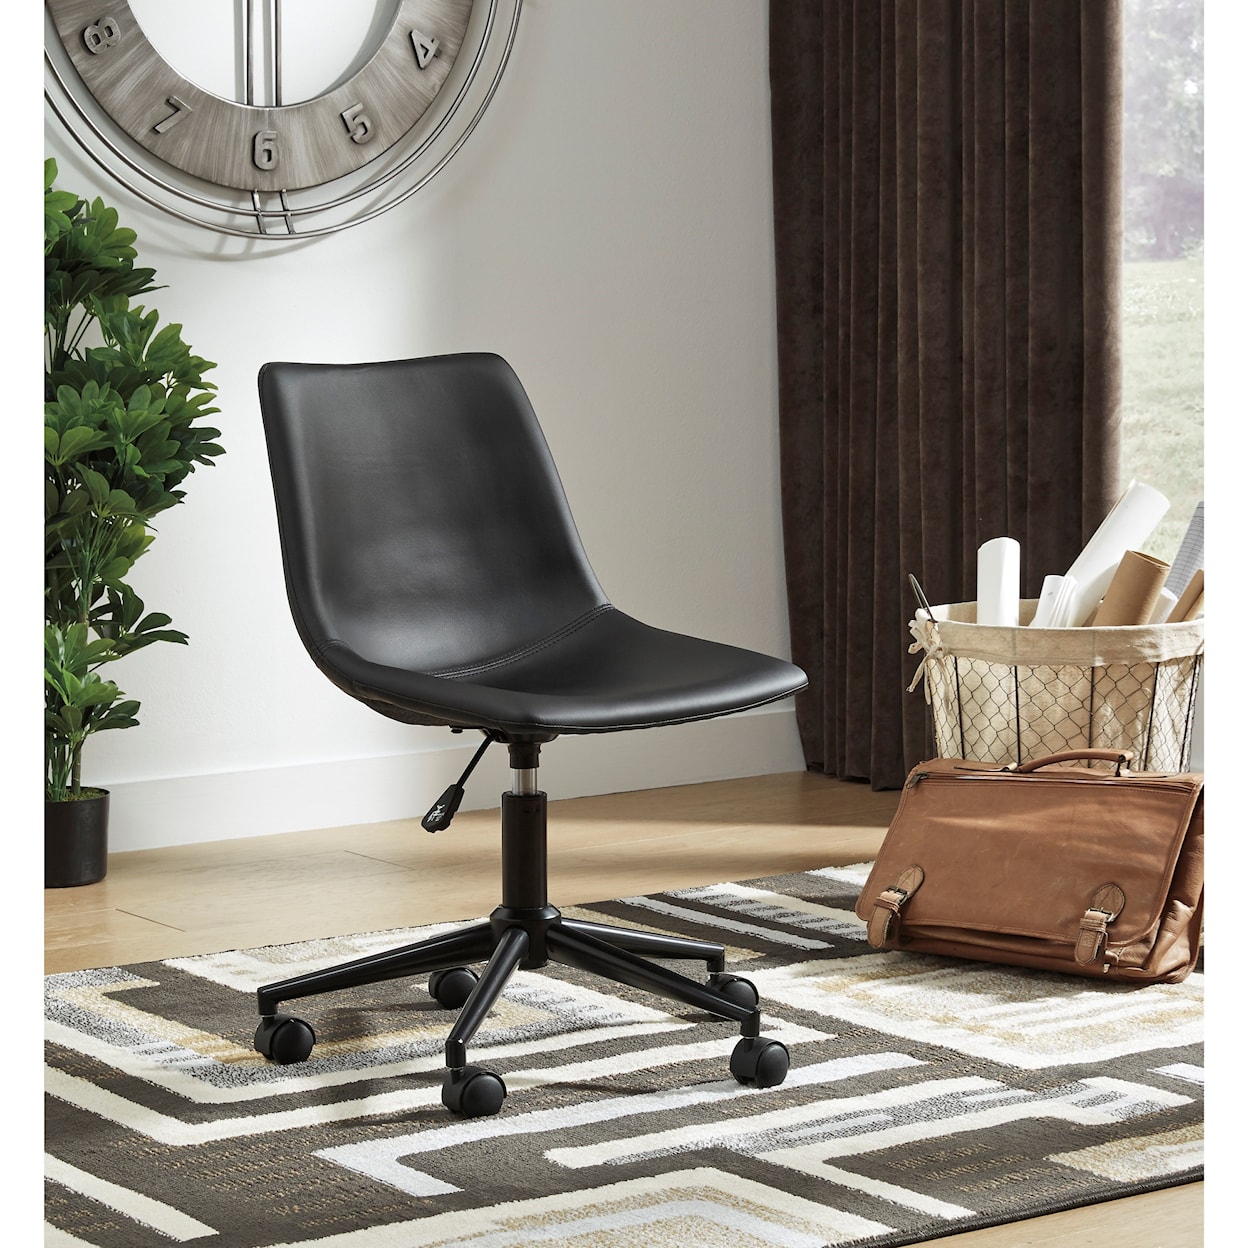 Signature Design Office Chair Program Home Office Swivel Desk Chair